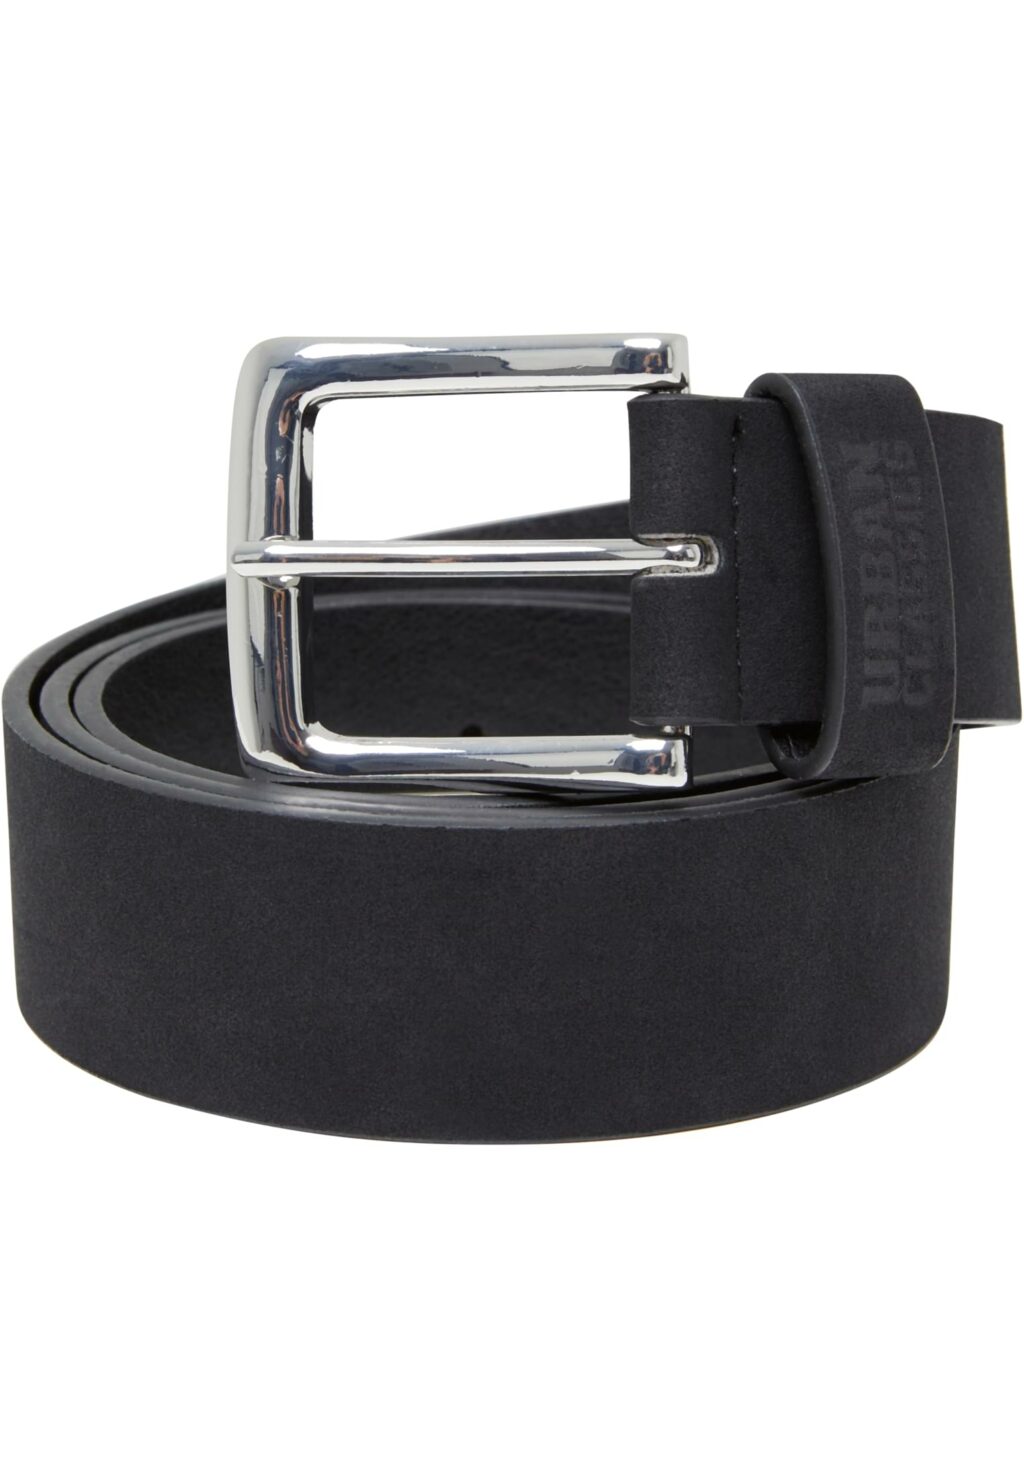 Suede Leather Imitation Belt black/silver TB6810